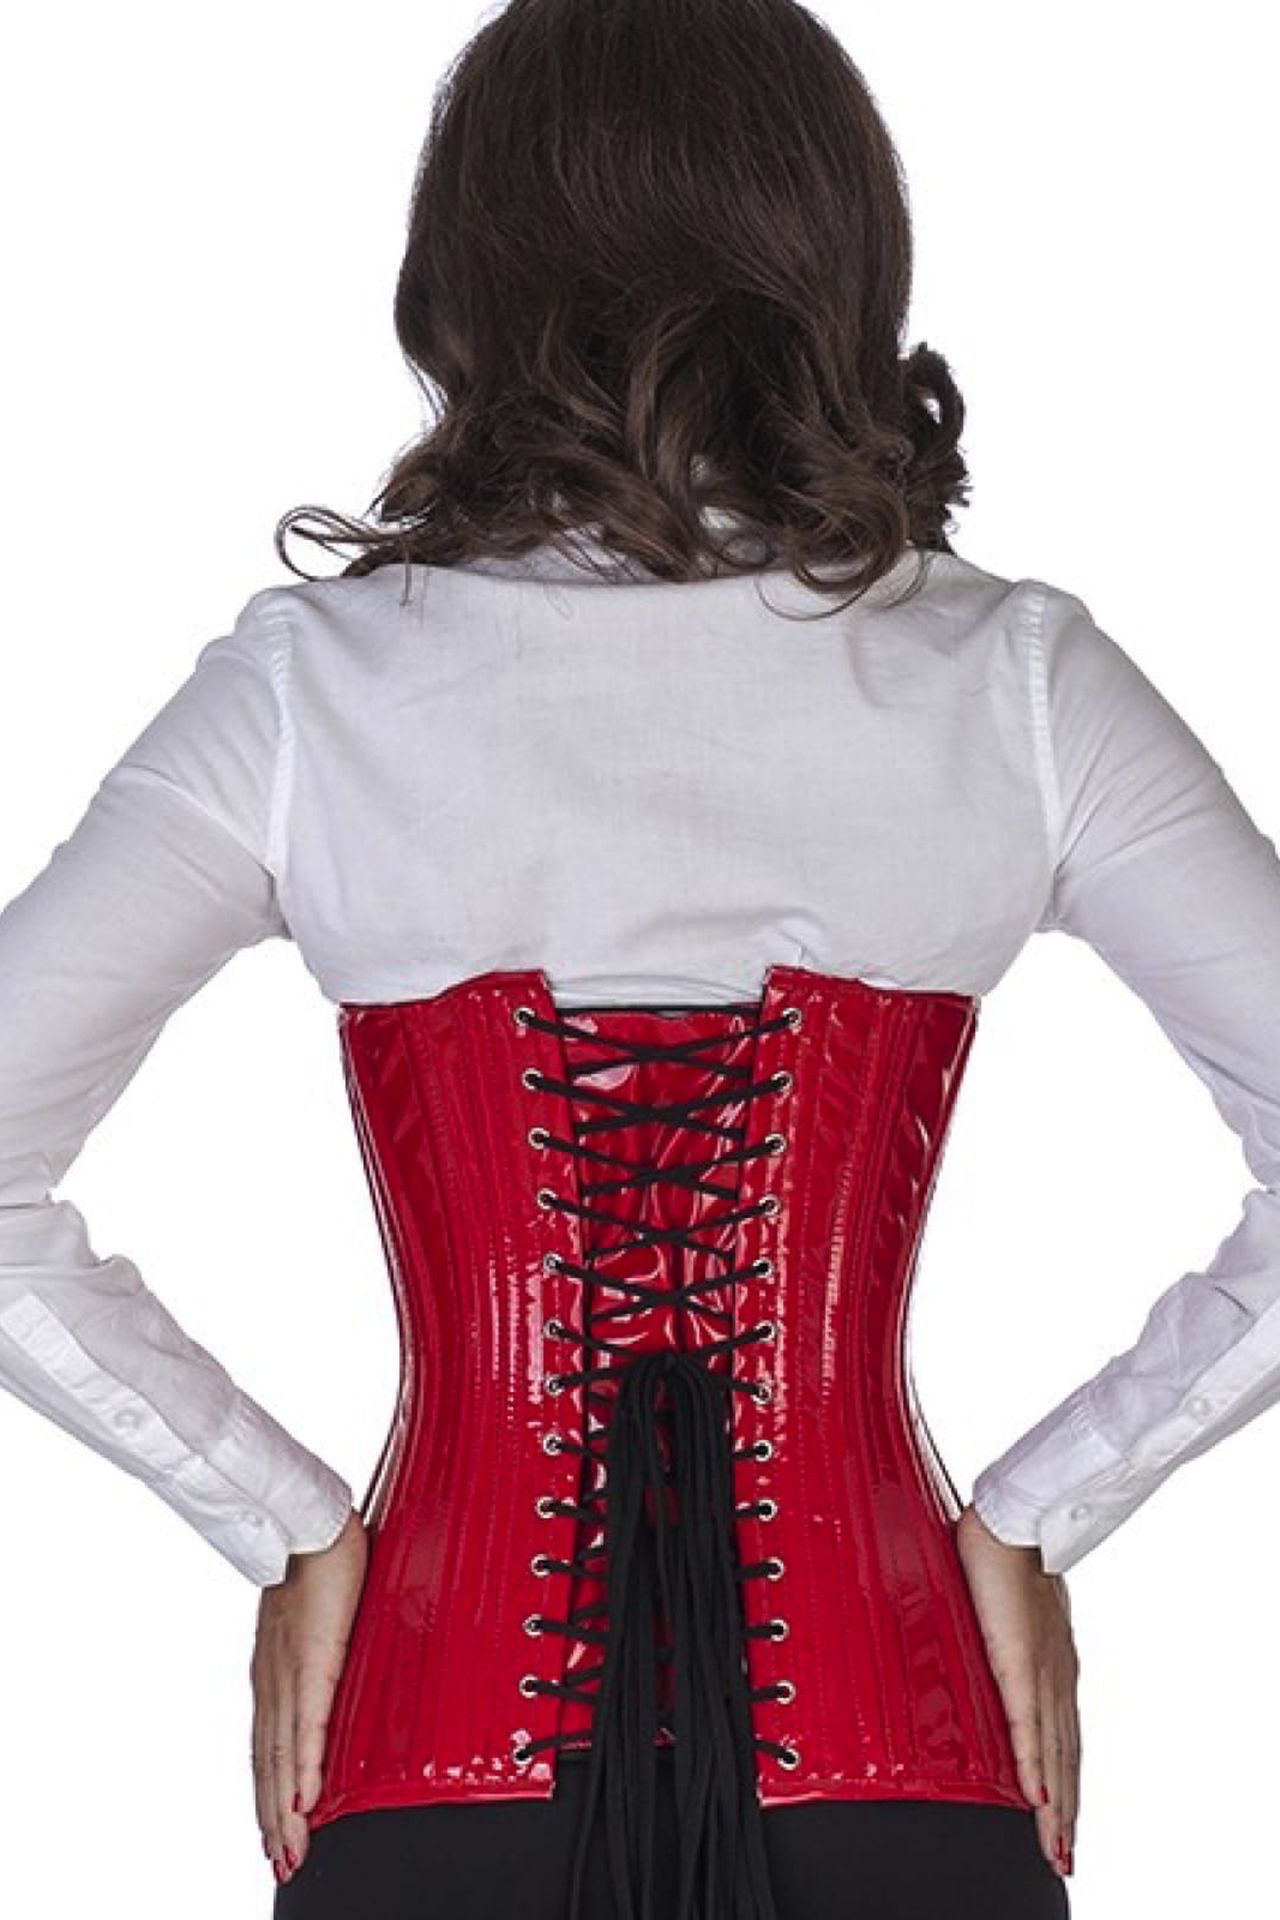 Lak corset rood onderborst rond gevormd Korset pn71